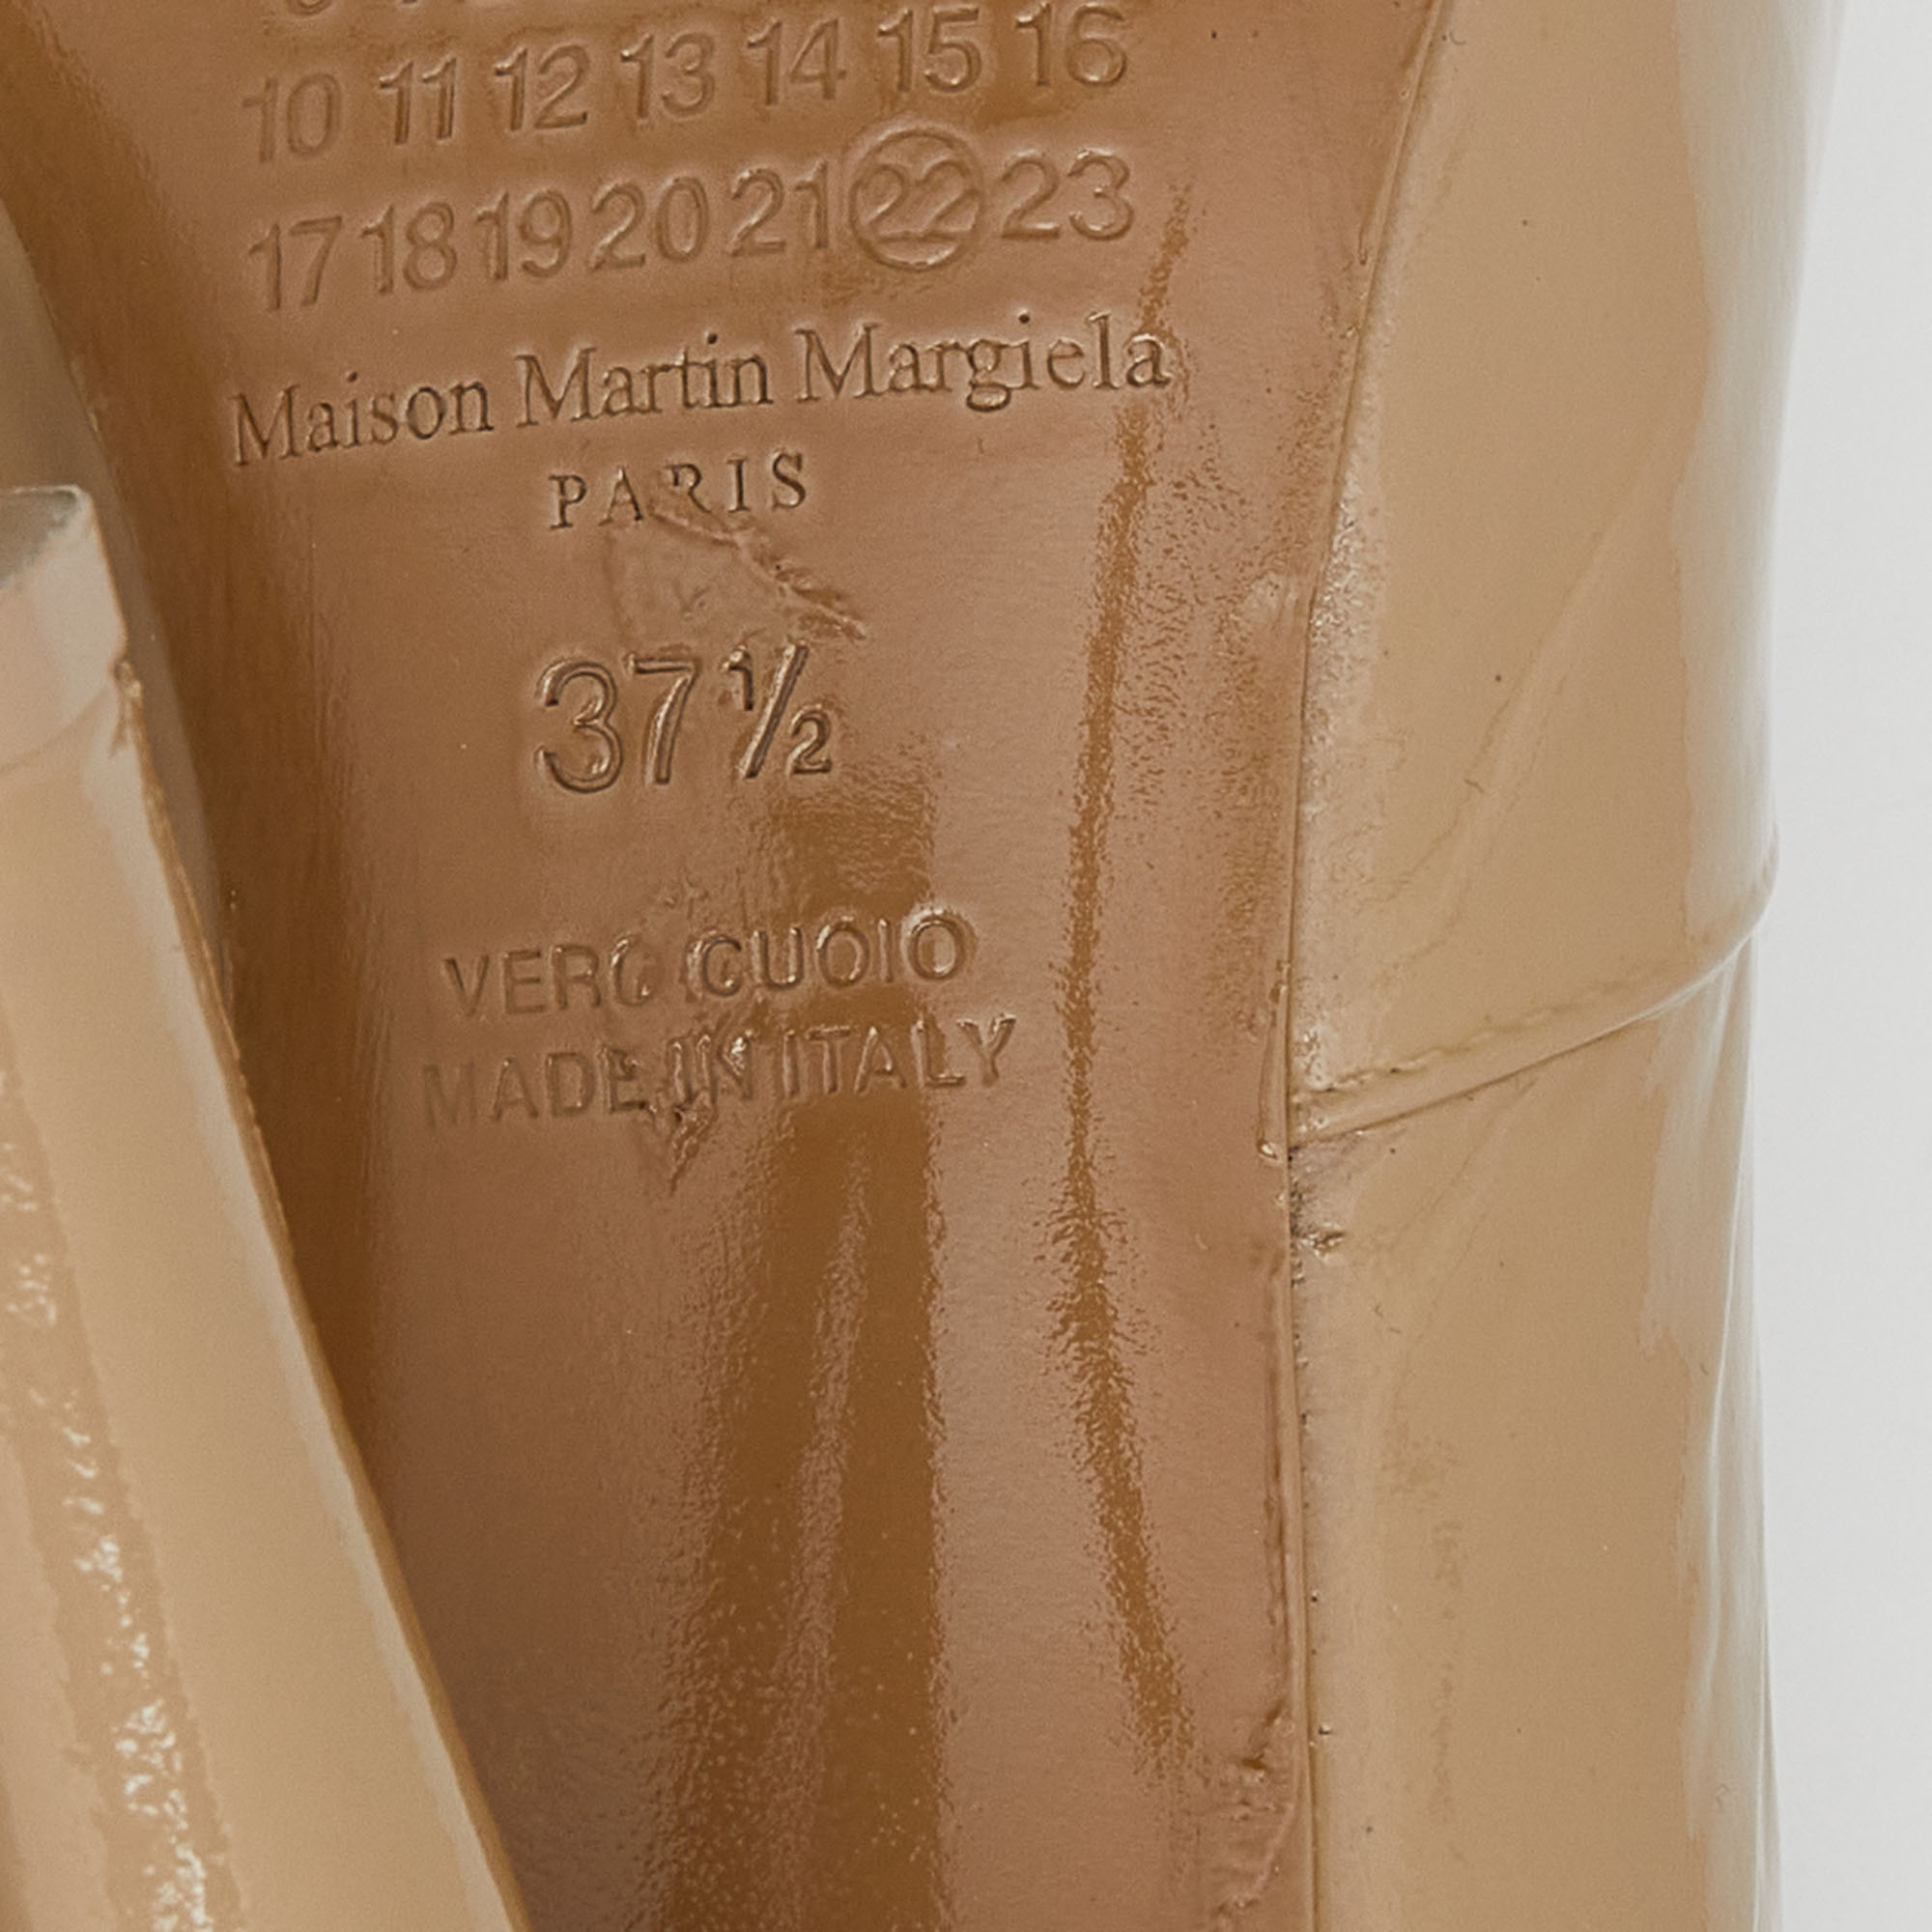 Maison Martin Margiela Beige Patent Leather Ankle Boots Size 37.5